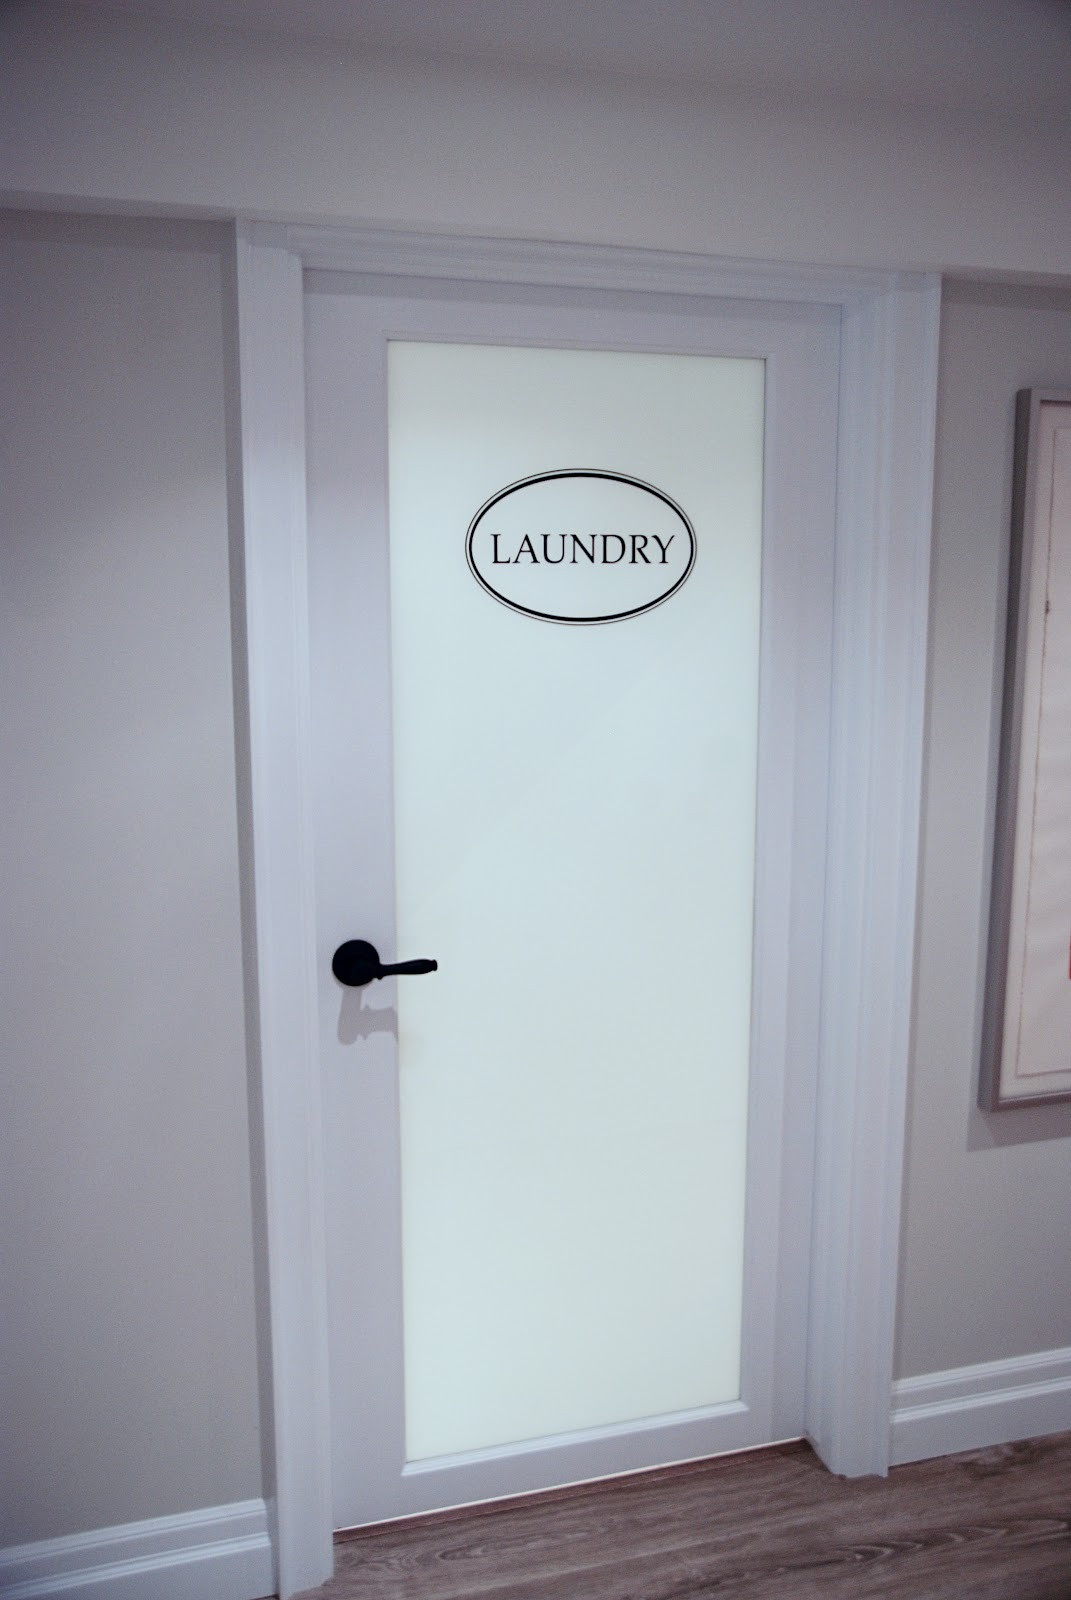 Best ideas about Laundry Room Door
. Save or Pin Chic Little Laundry Room Door Rambling Renovators Now.